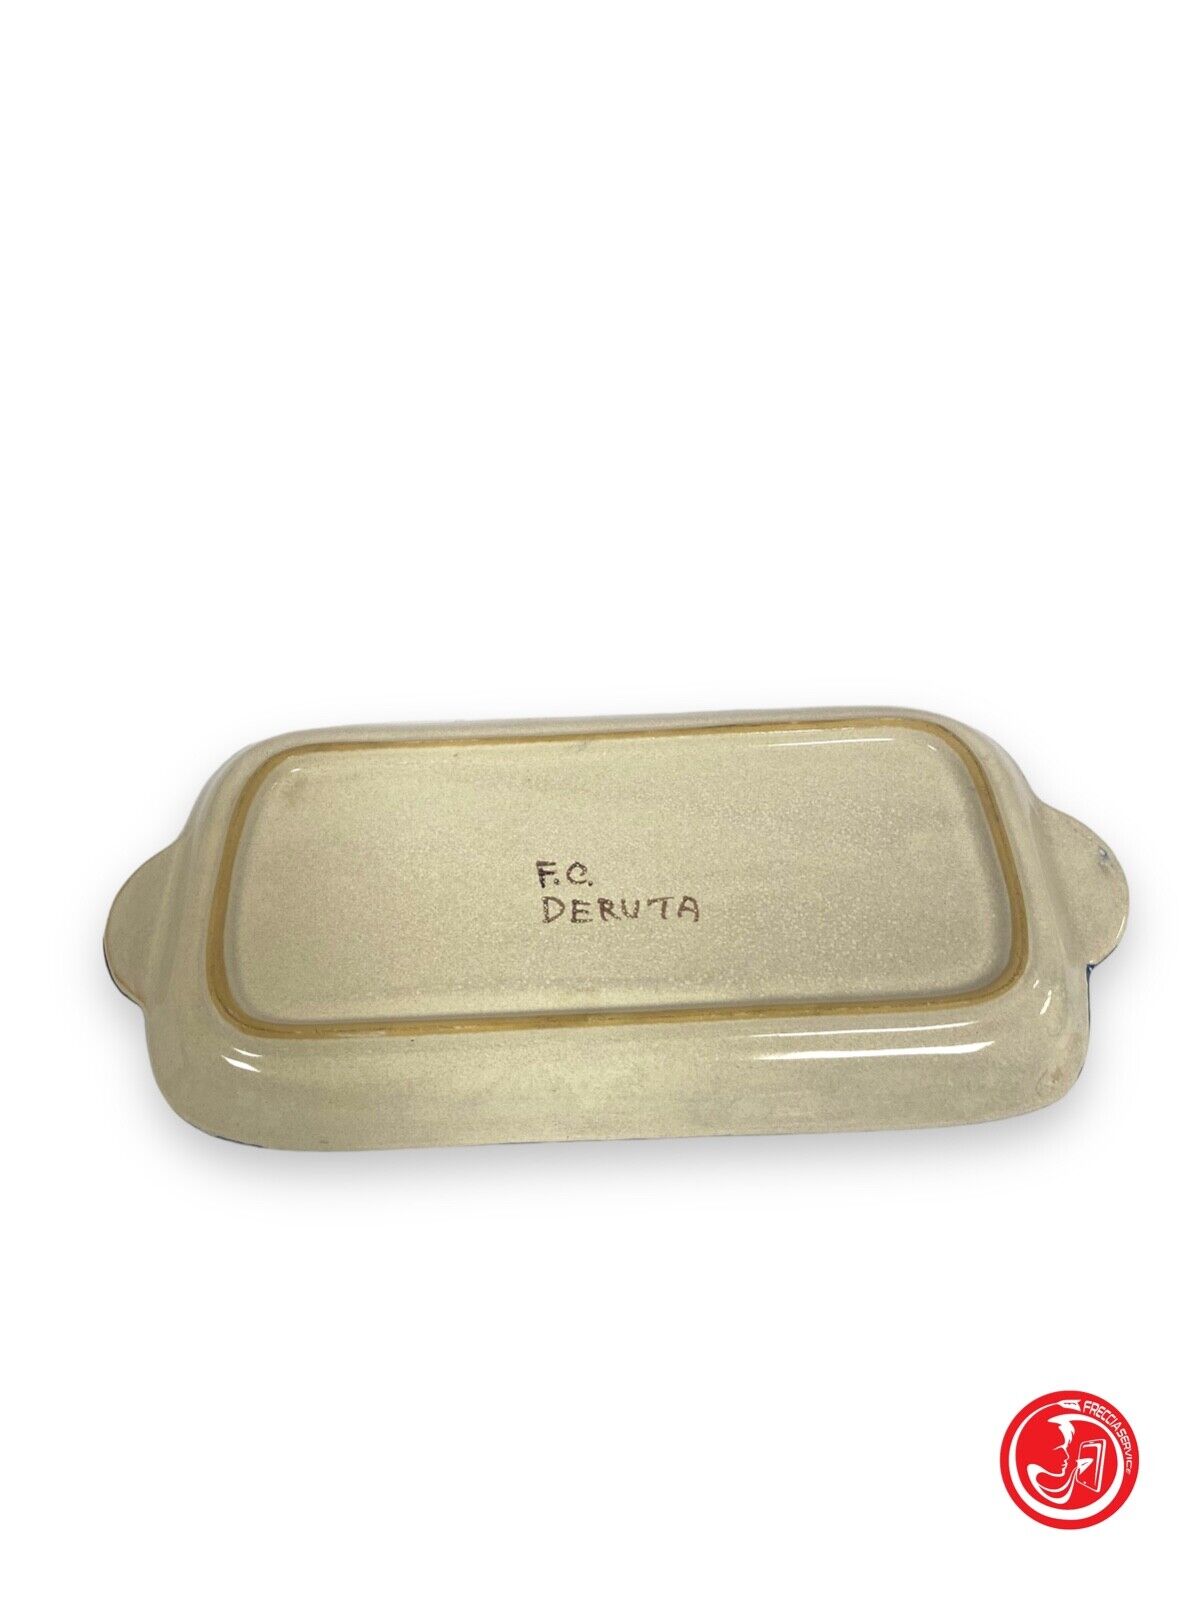 FC Deruta ceramic tray 